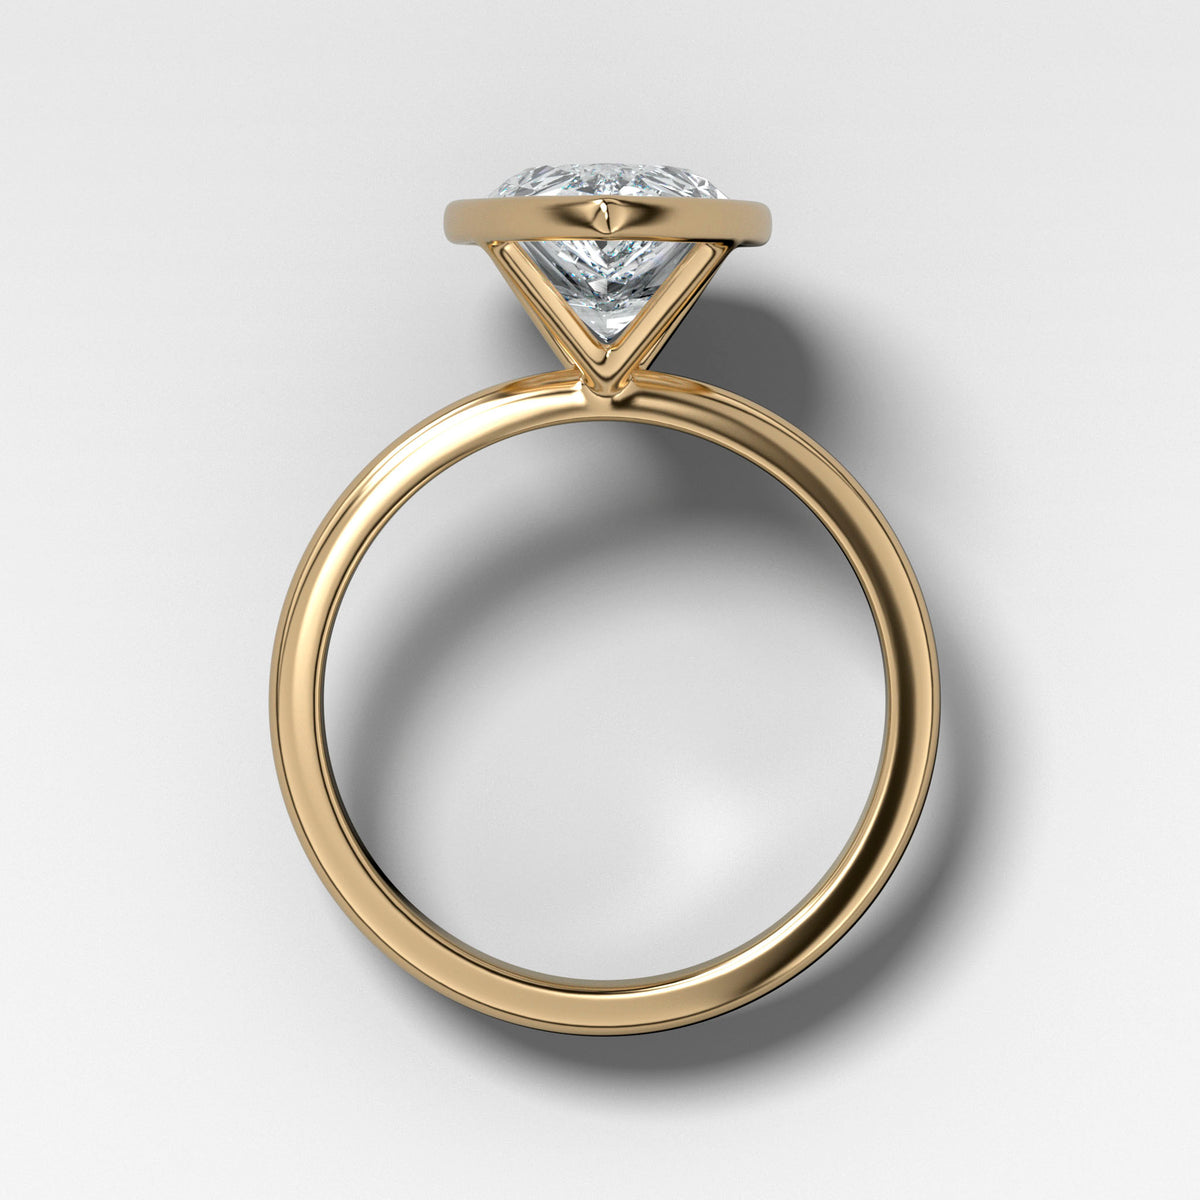 Penumbra Bezel Set Engagement Ring With Pear Cut